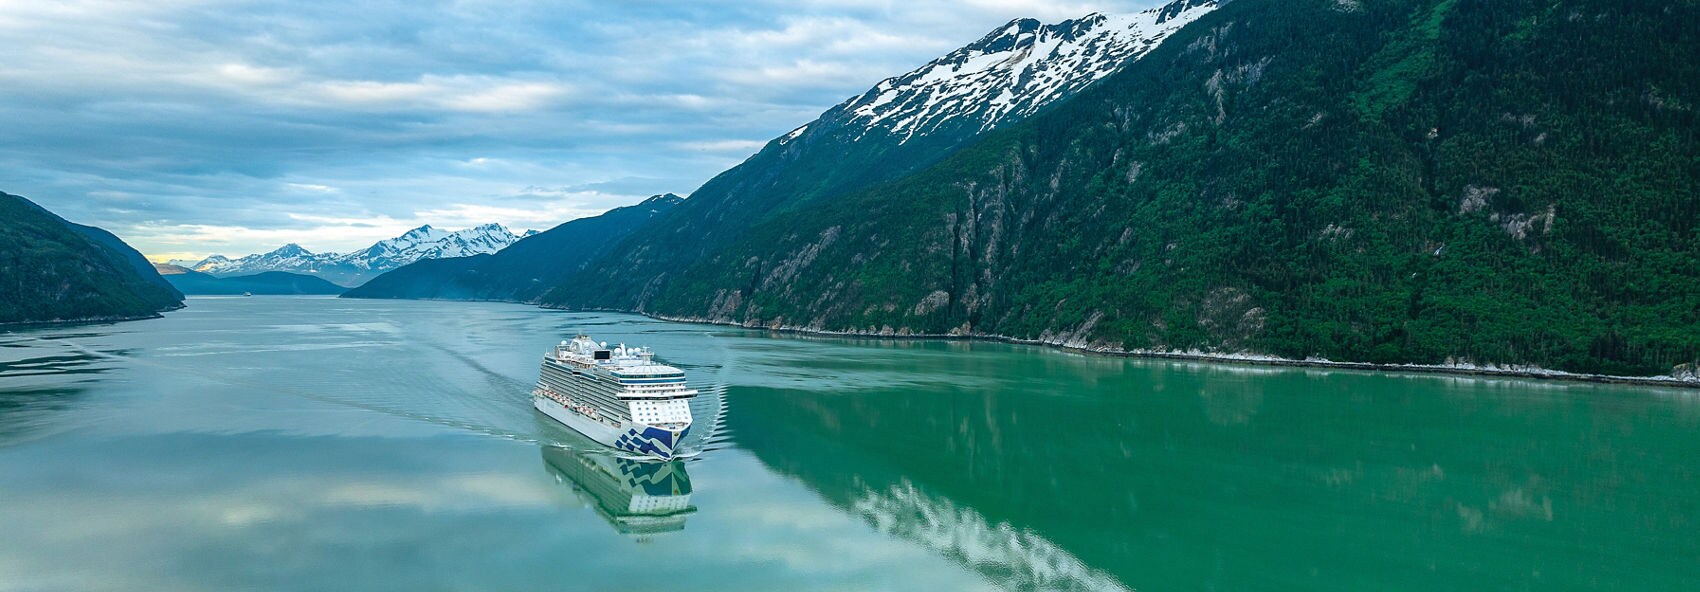 Alaska Cruises from Seattle 7Day Alaska Inside Passage Cruise